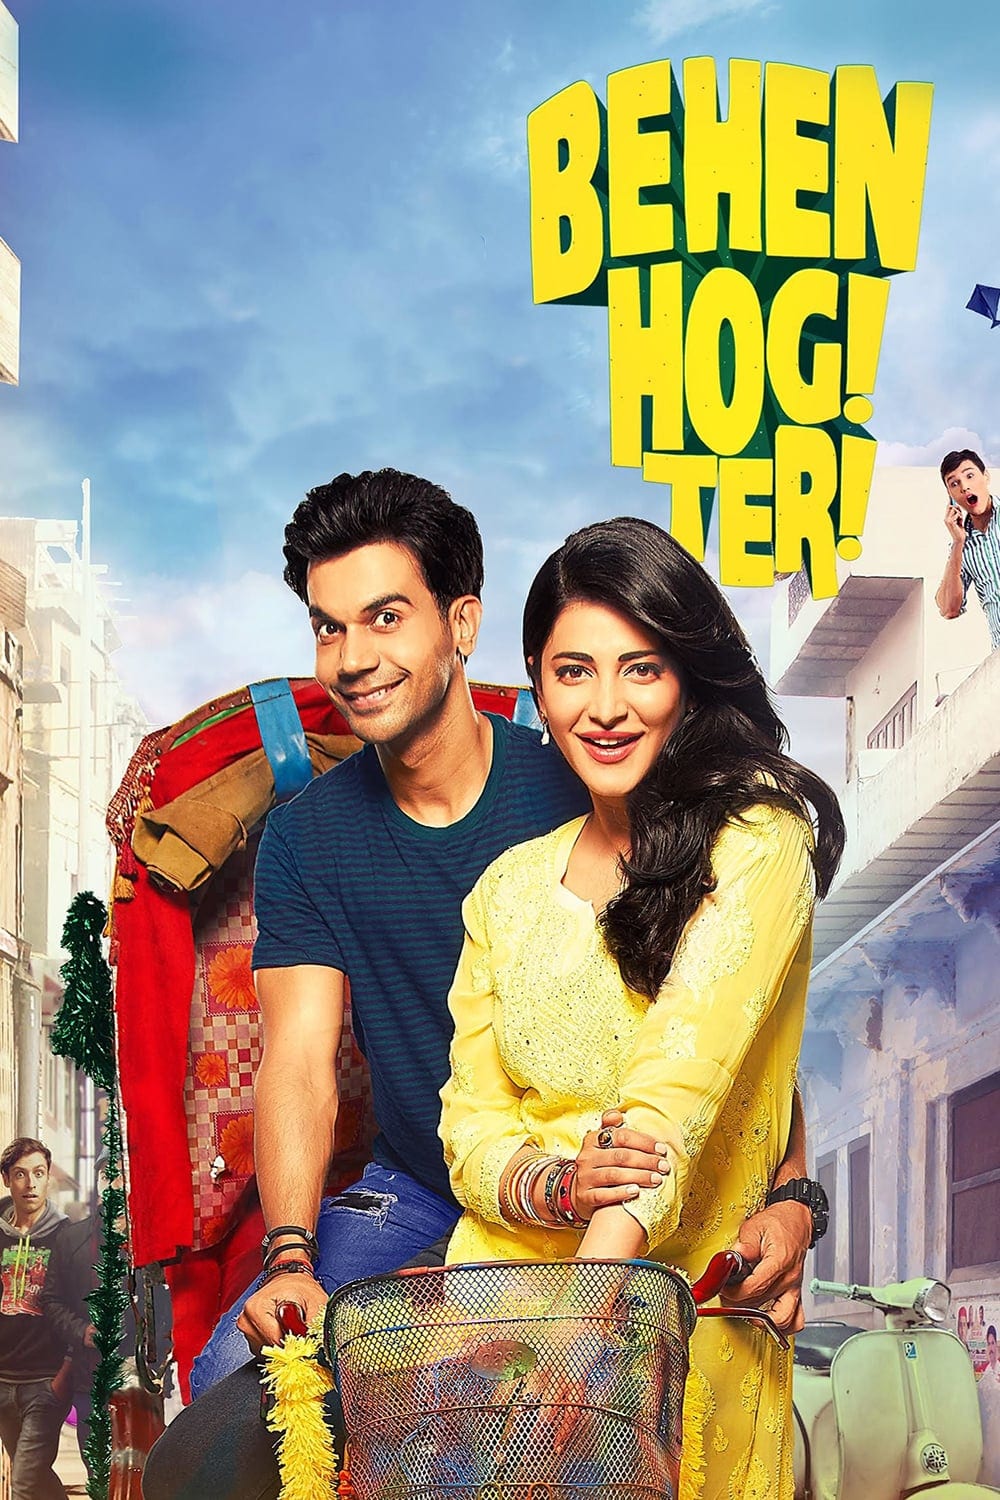 Poster for the movie "Behen Hogi Teri"